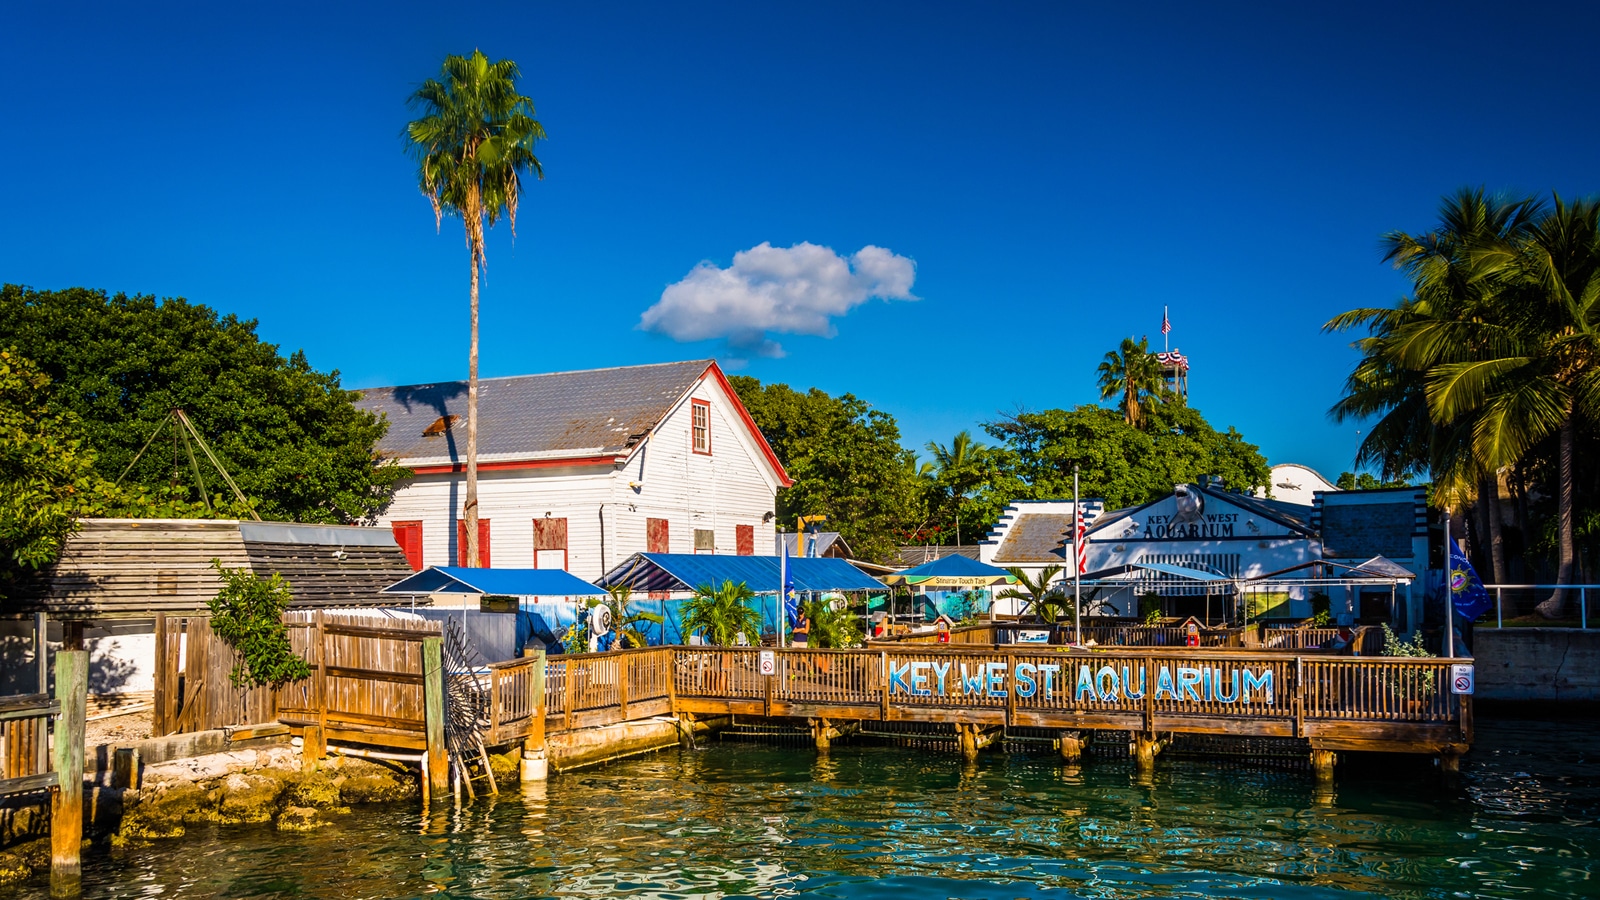 December In Key West - The Key West Aquarium